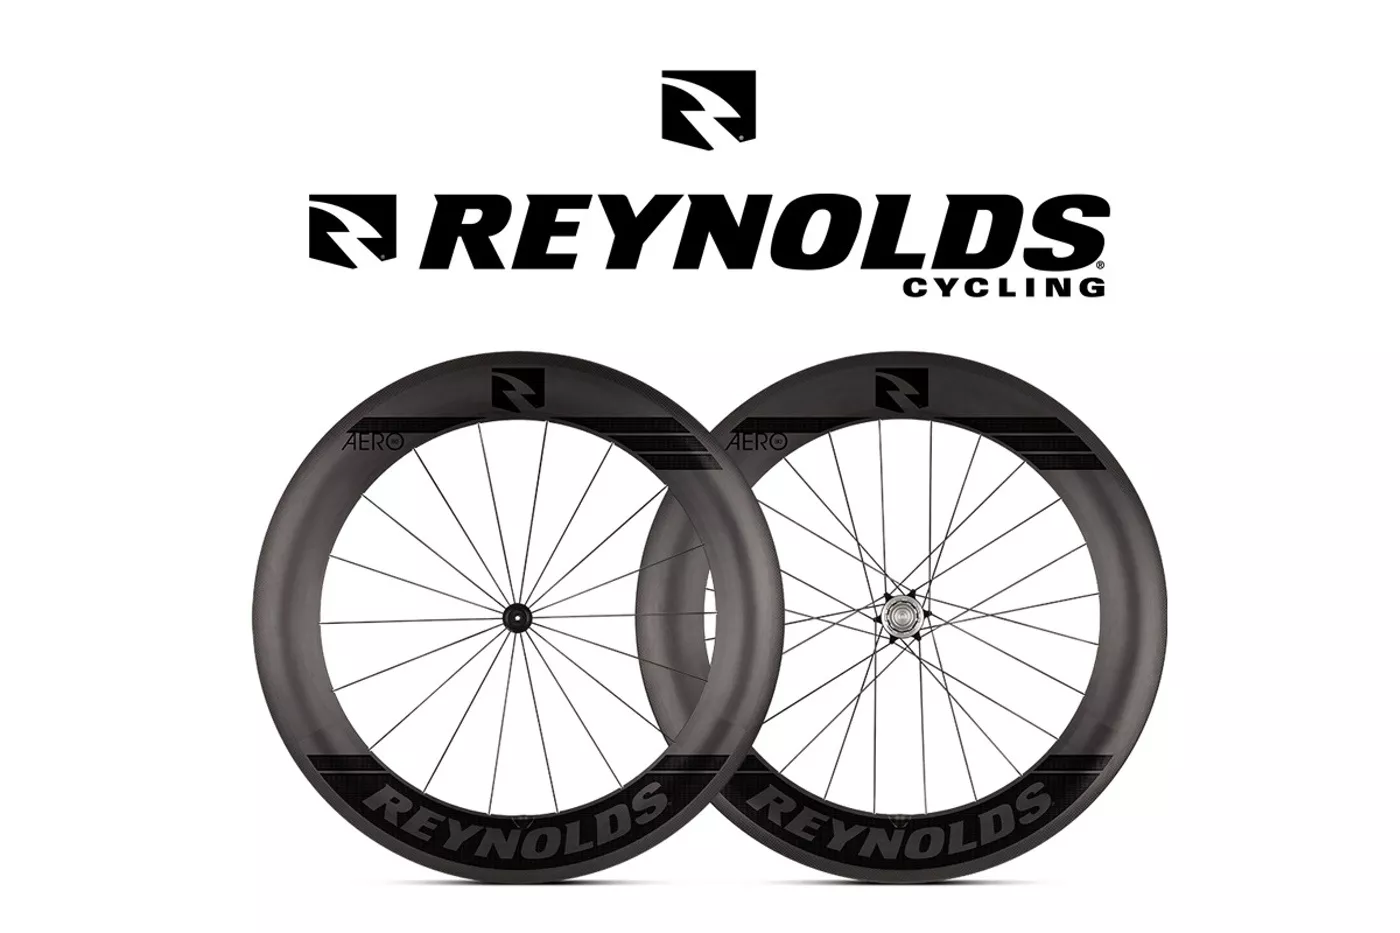 Biketrading distribuirá Reynolds en España